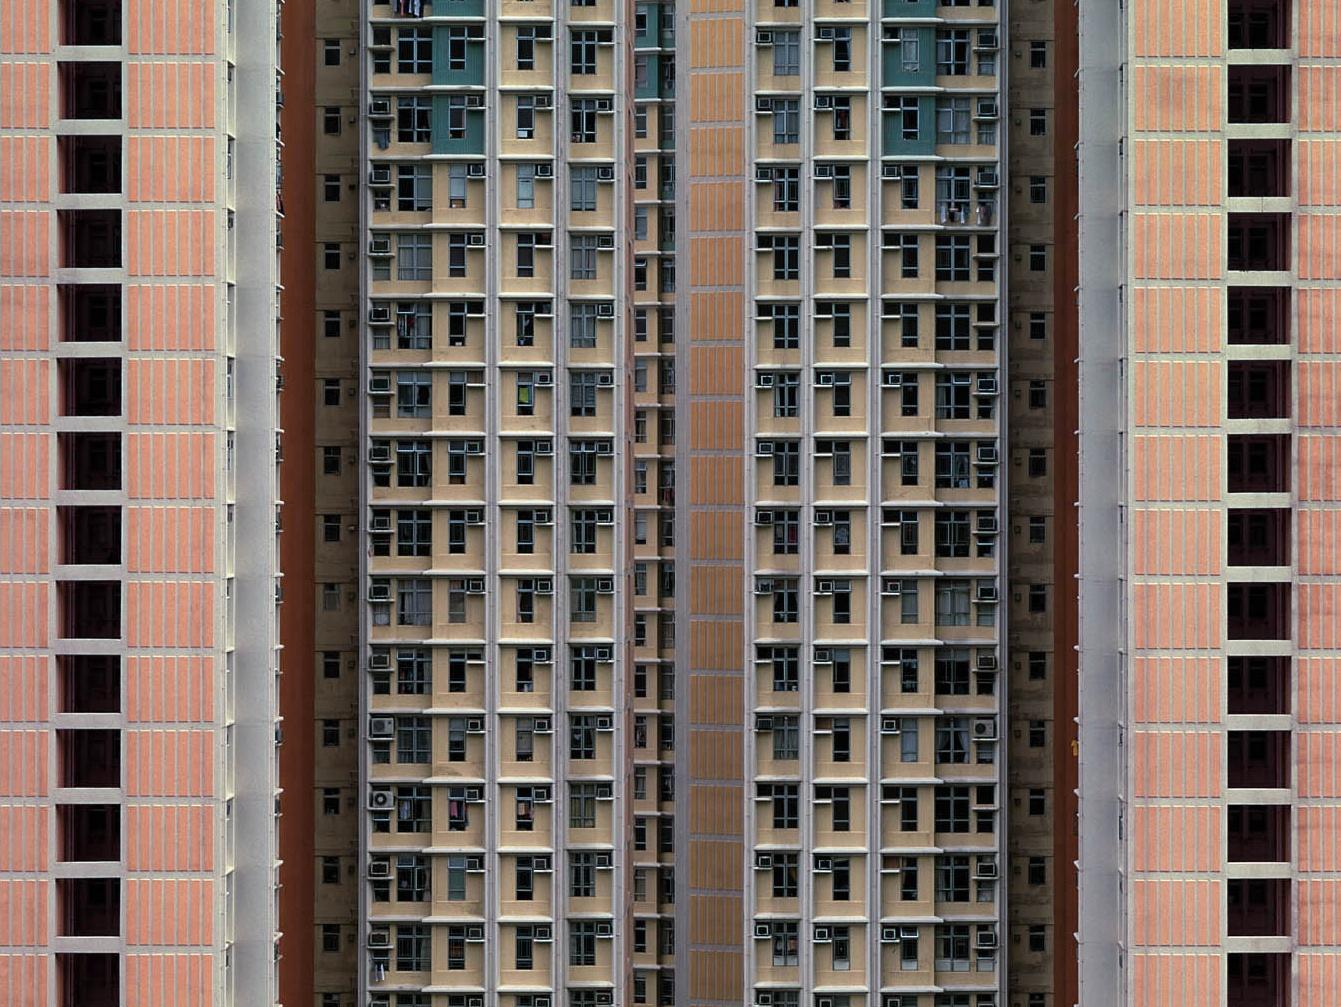 Architecture of Density #20 – Michael Wolf, City, Skyscraper, Architecture, Art For Sale 1